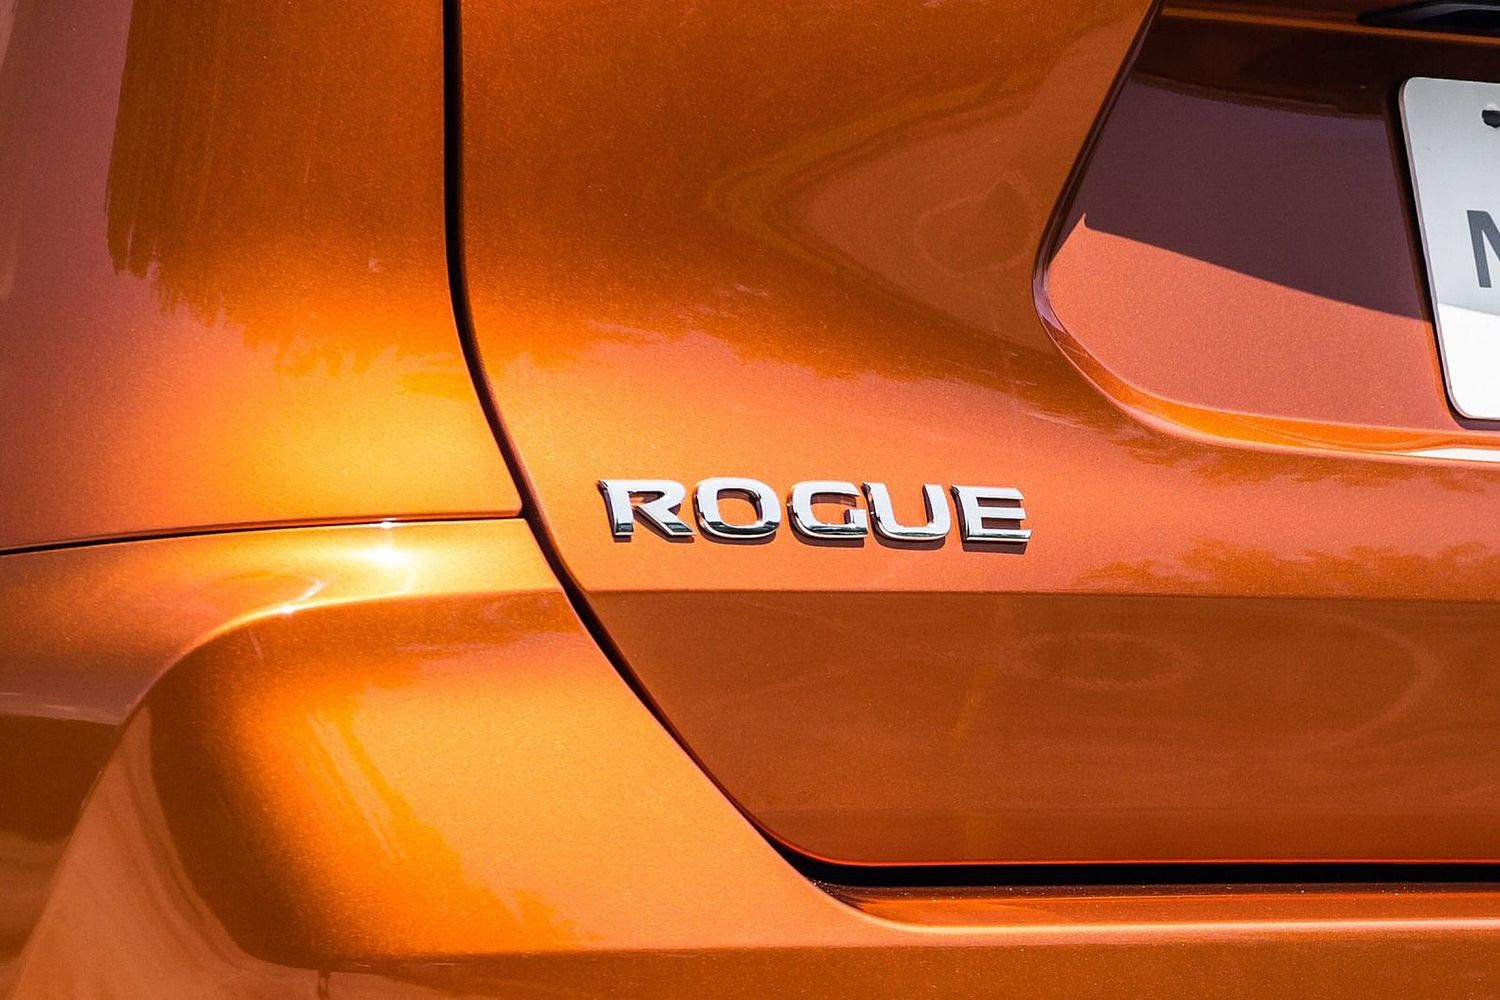 Nissan Rogue SL 4dr SUV Rear Badge (2017 model year shown)